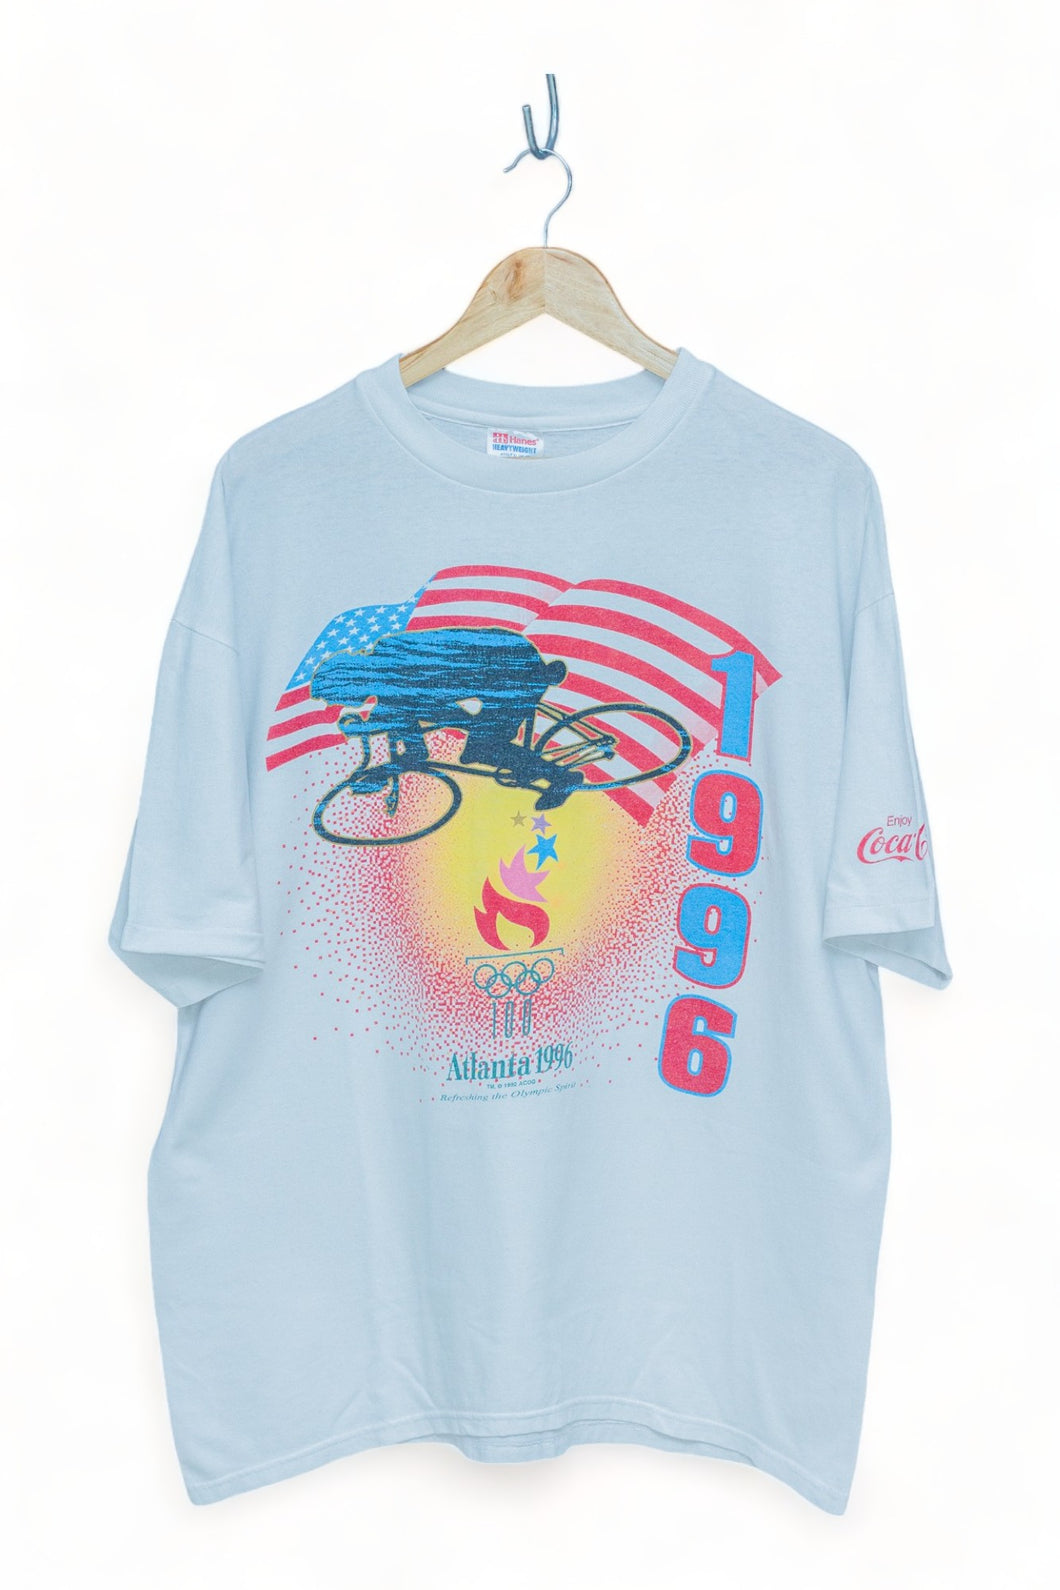 Atlanta 1996 Summer Games Cyclist T-Shirt (XL)